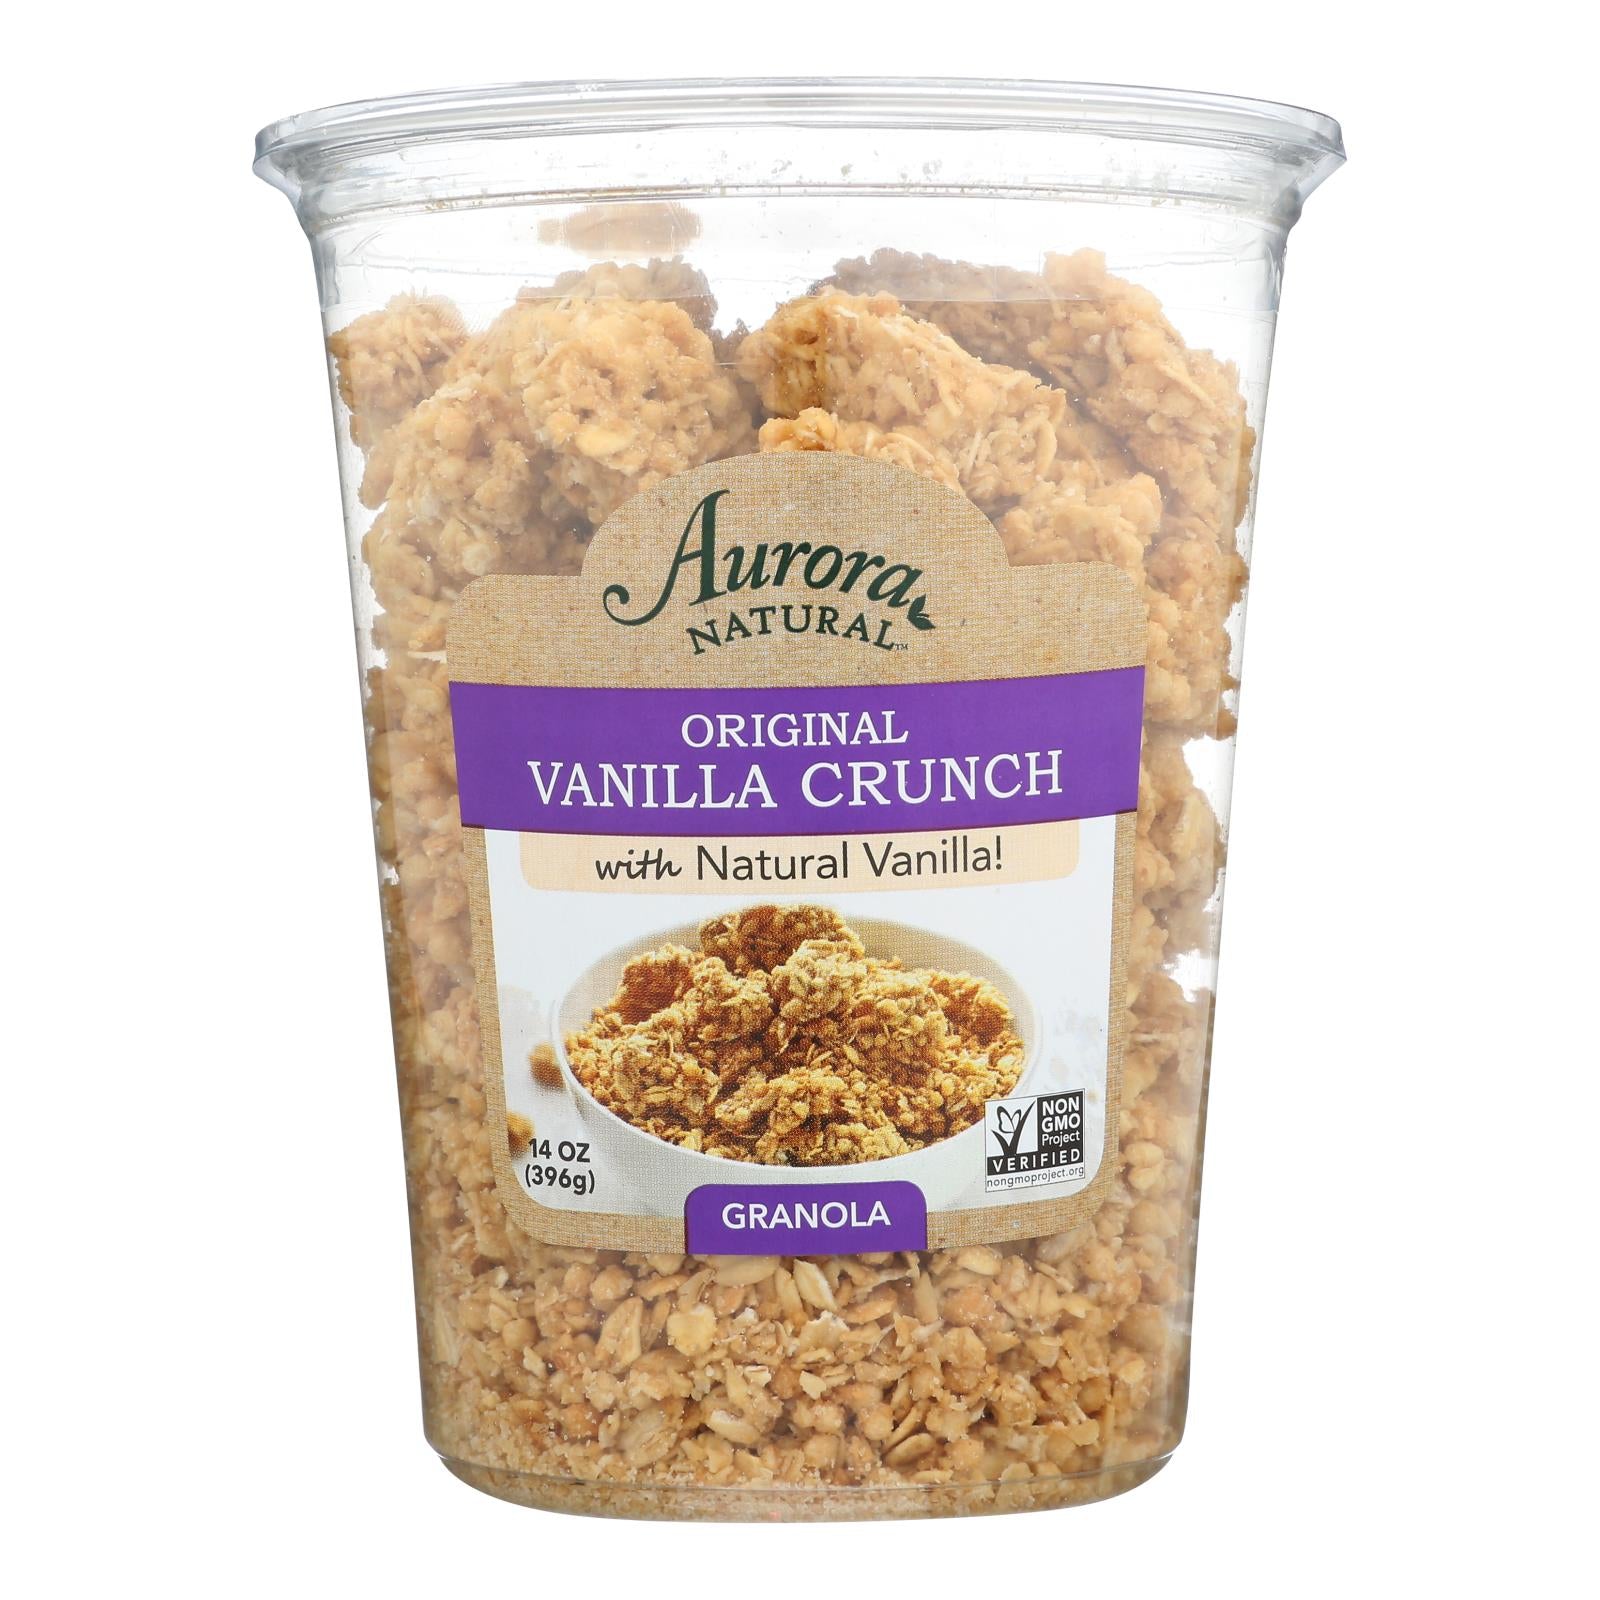 Aurora Natural Products, Aurora Natural Products - Vanilla Crunch Granola - Case of 12 - 14 oz. (Pack of 12)